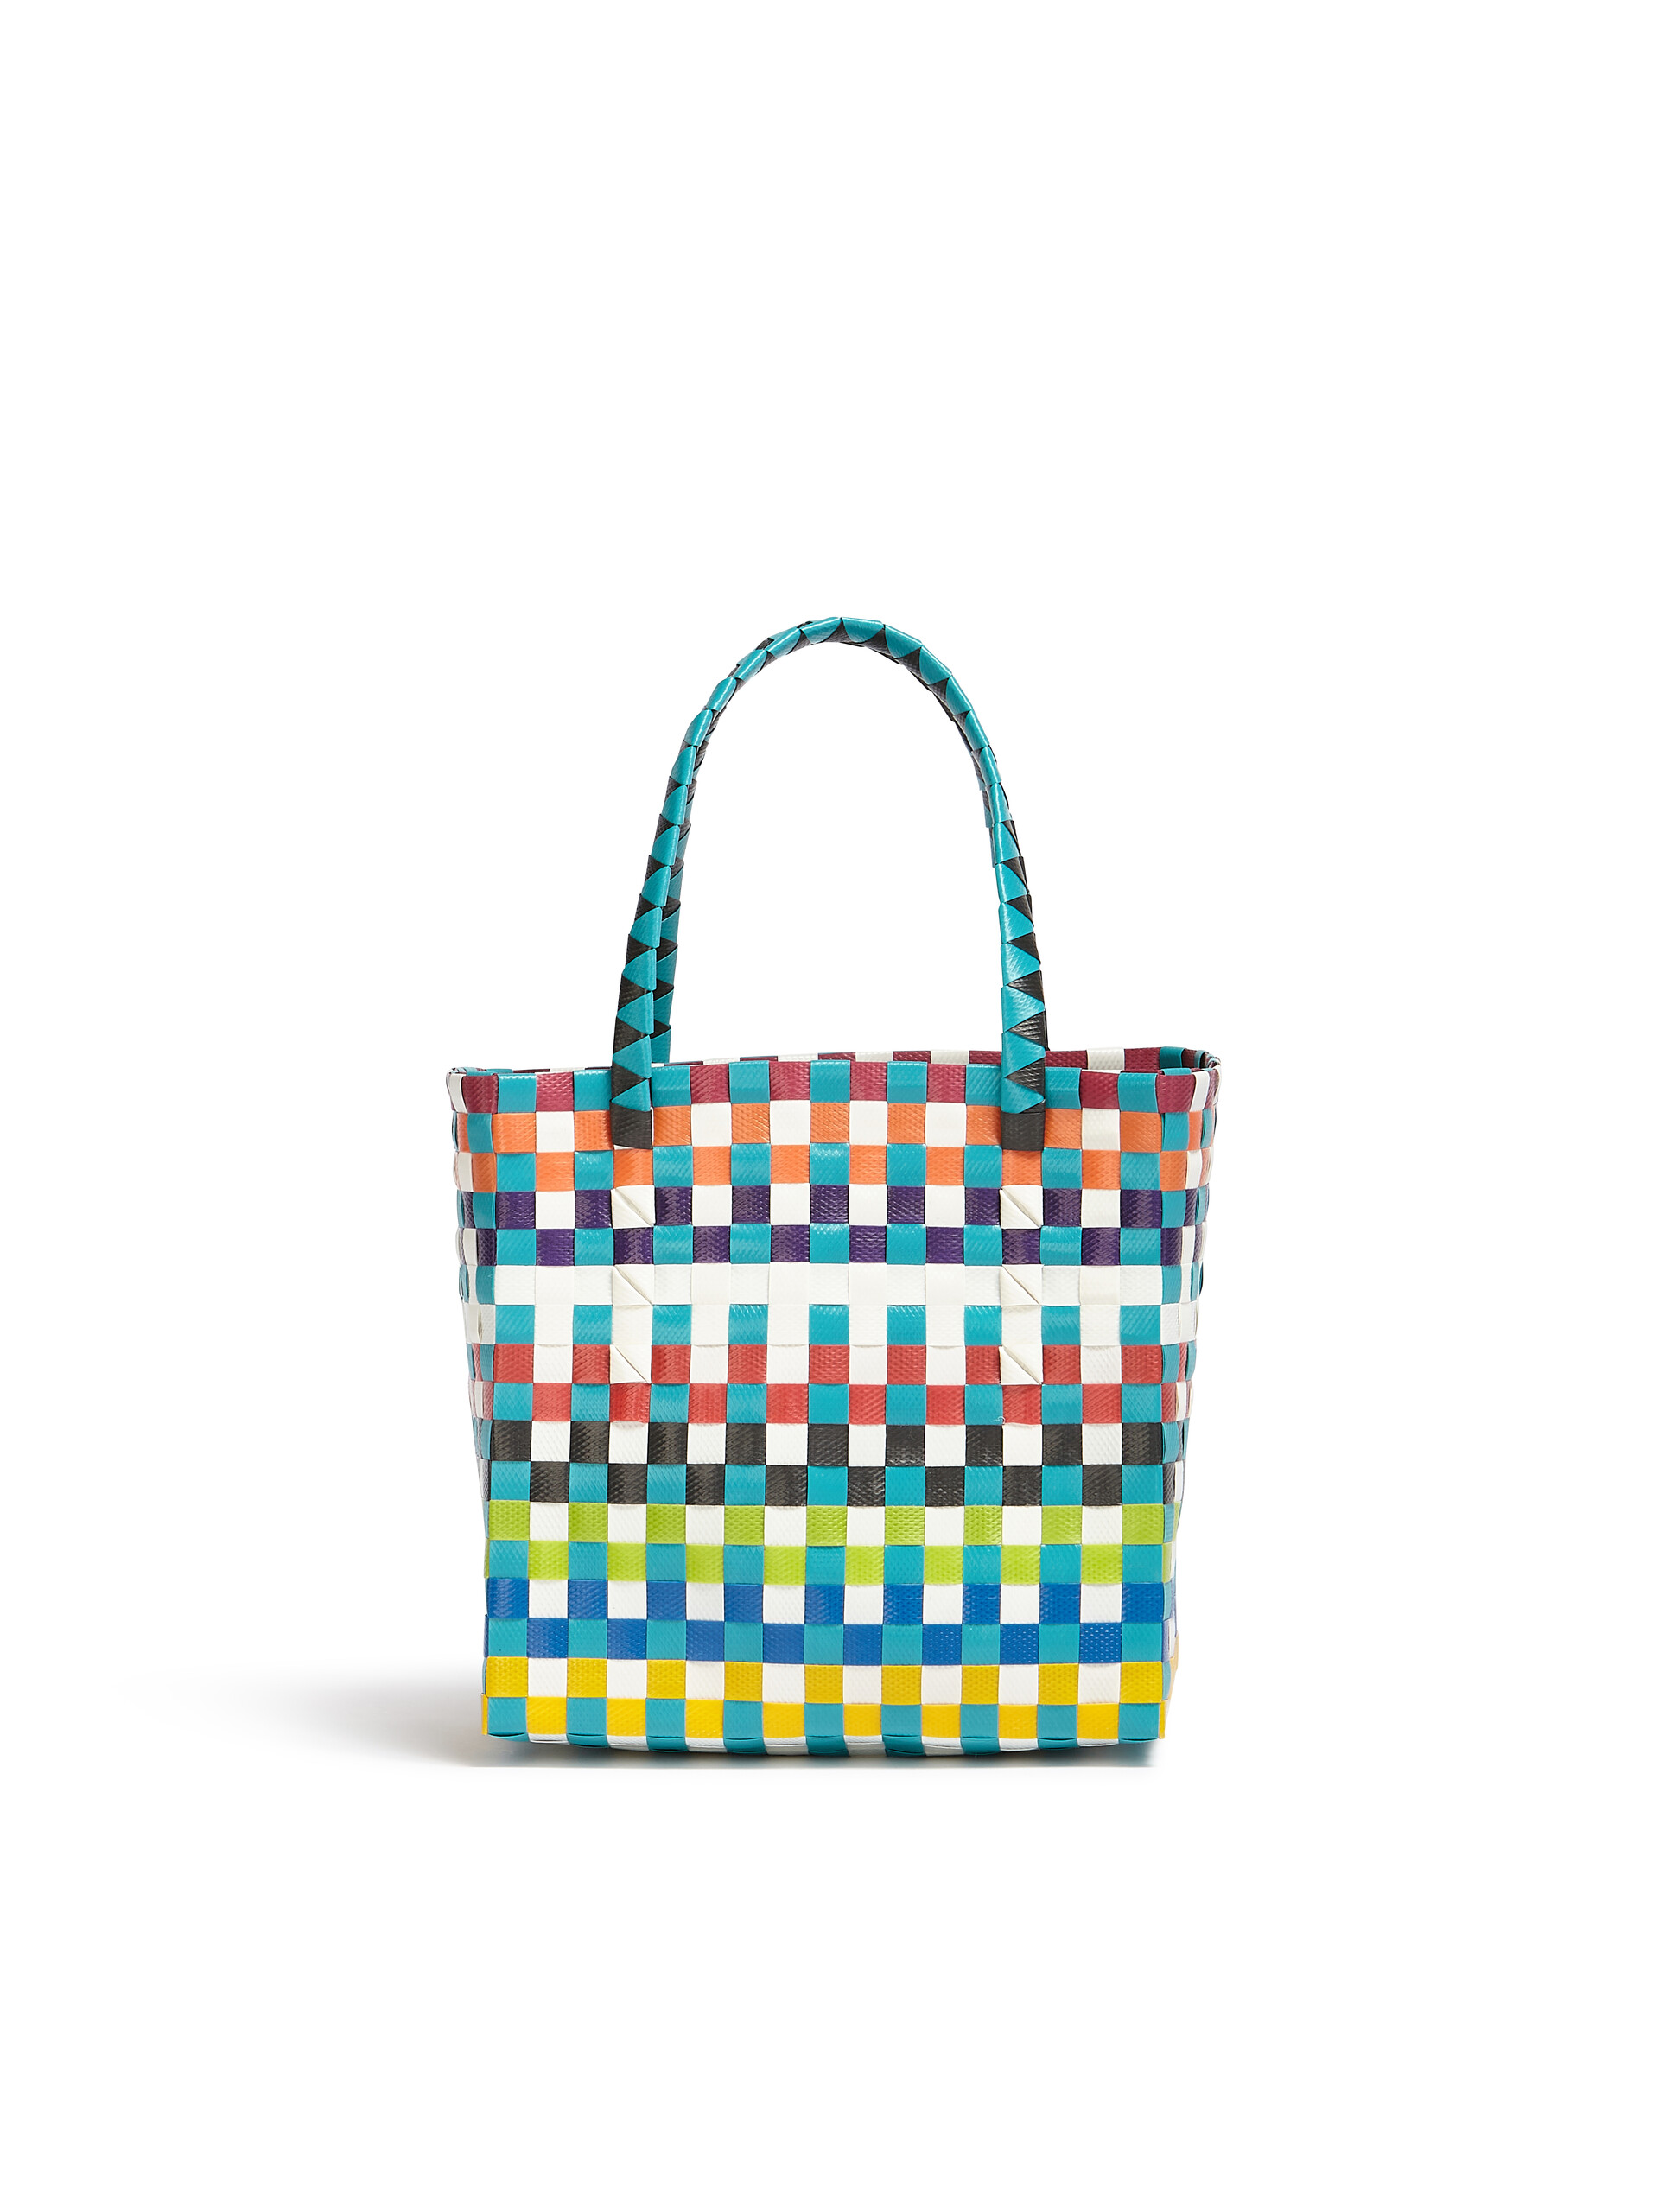 MARNI MARKET BASKET bag in multicolor woven material - Bags - Image 3